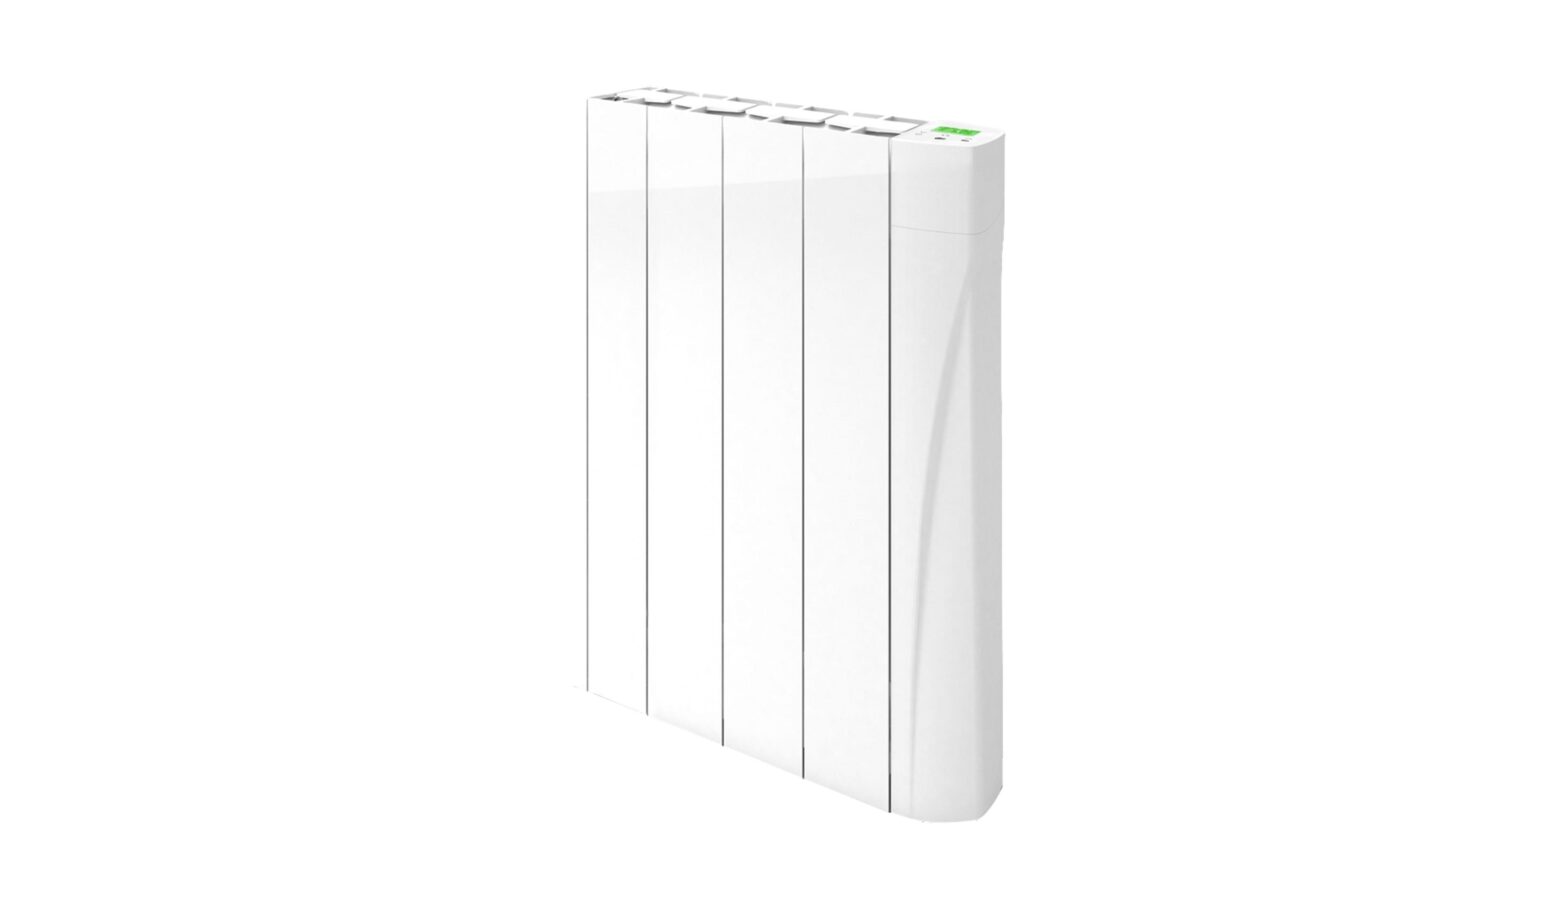 TCP Smart SMAWRA500WOIL425 WiFi Wall Heater User Manual